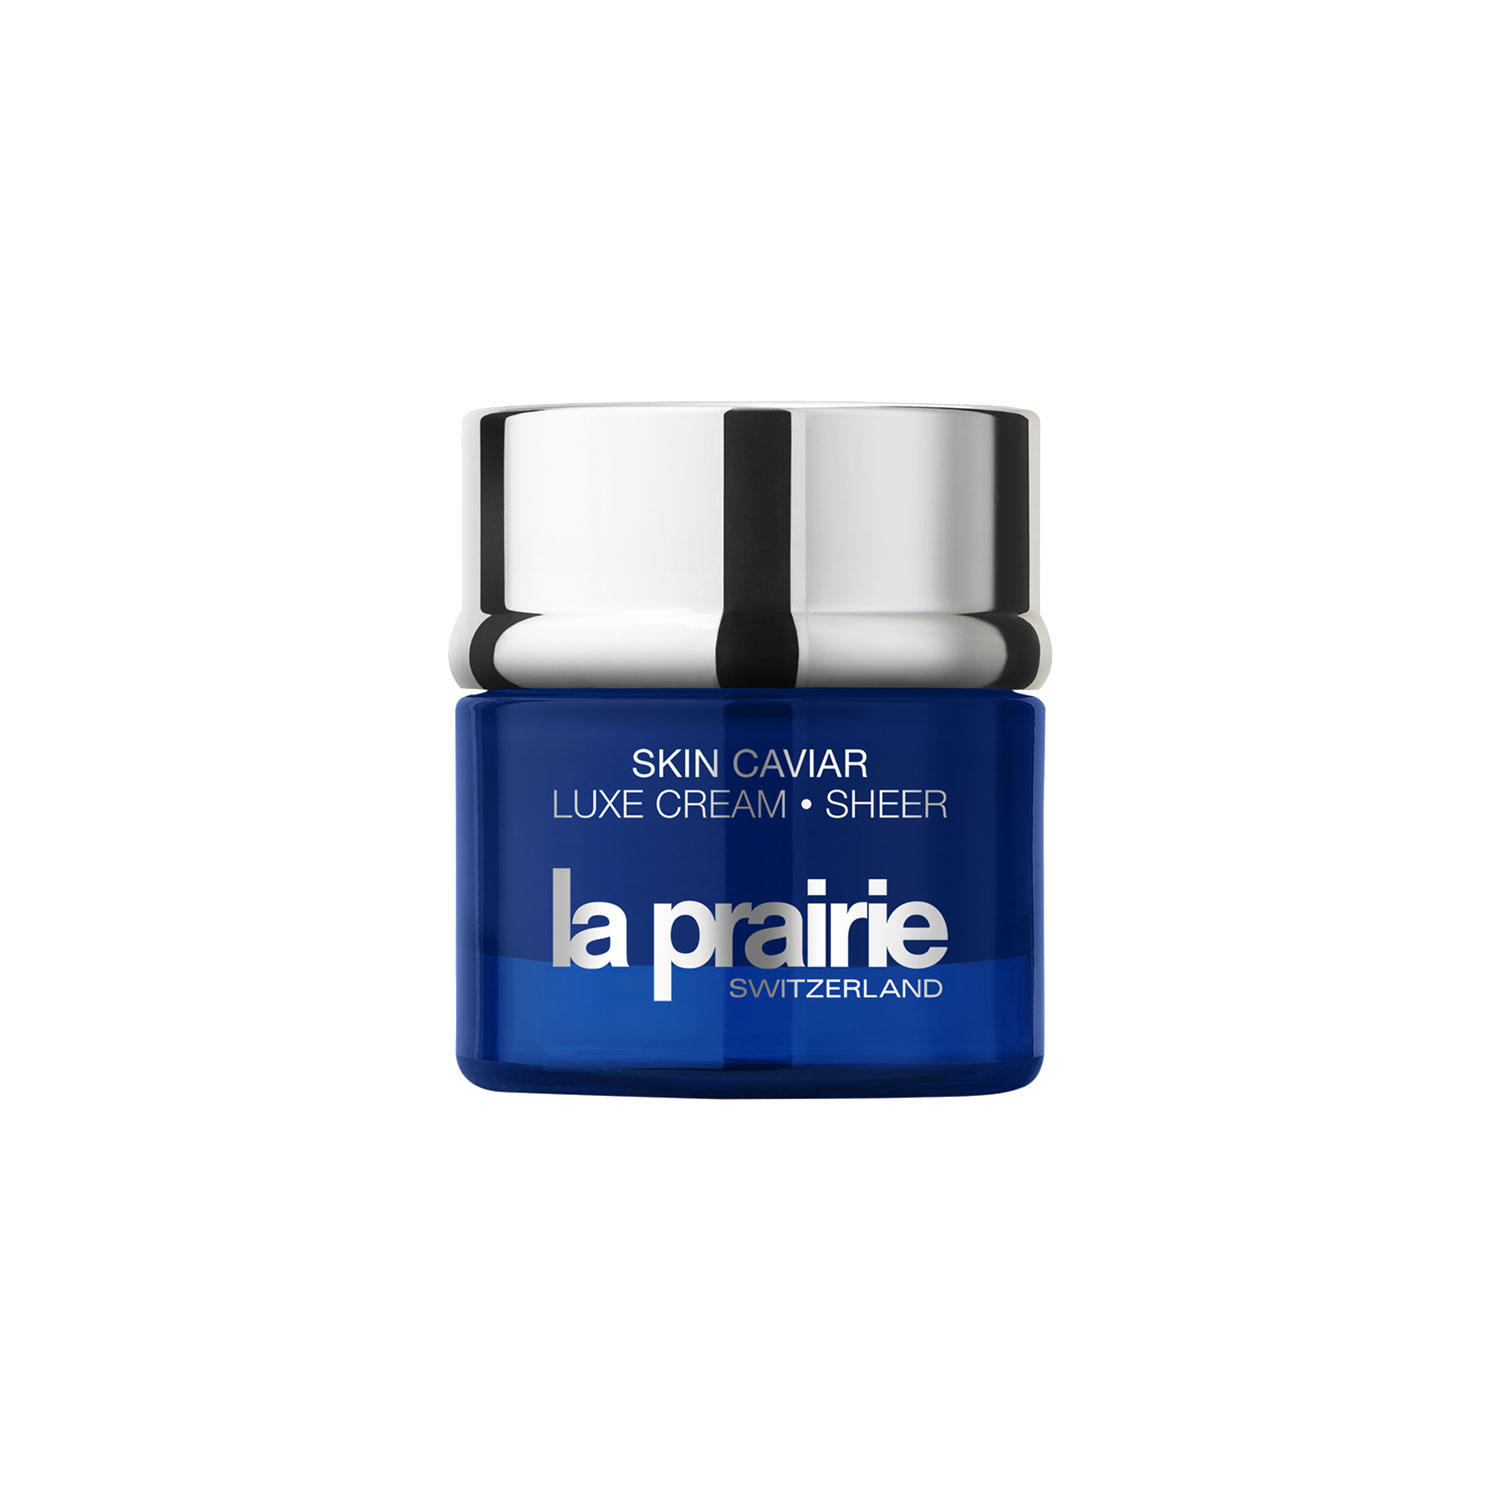 La Prairie Switzerland Skin Caviar Luxe Cream Sheer Mini